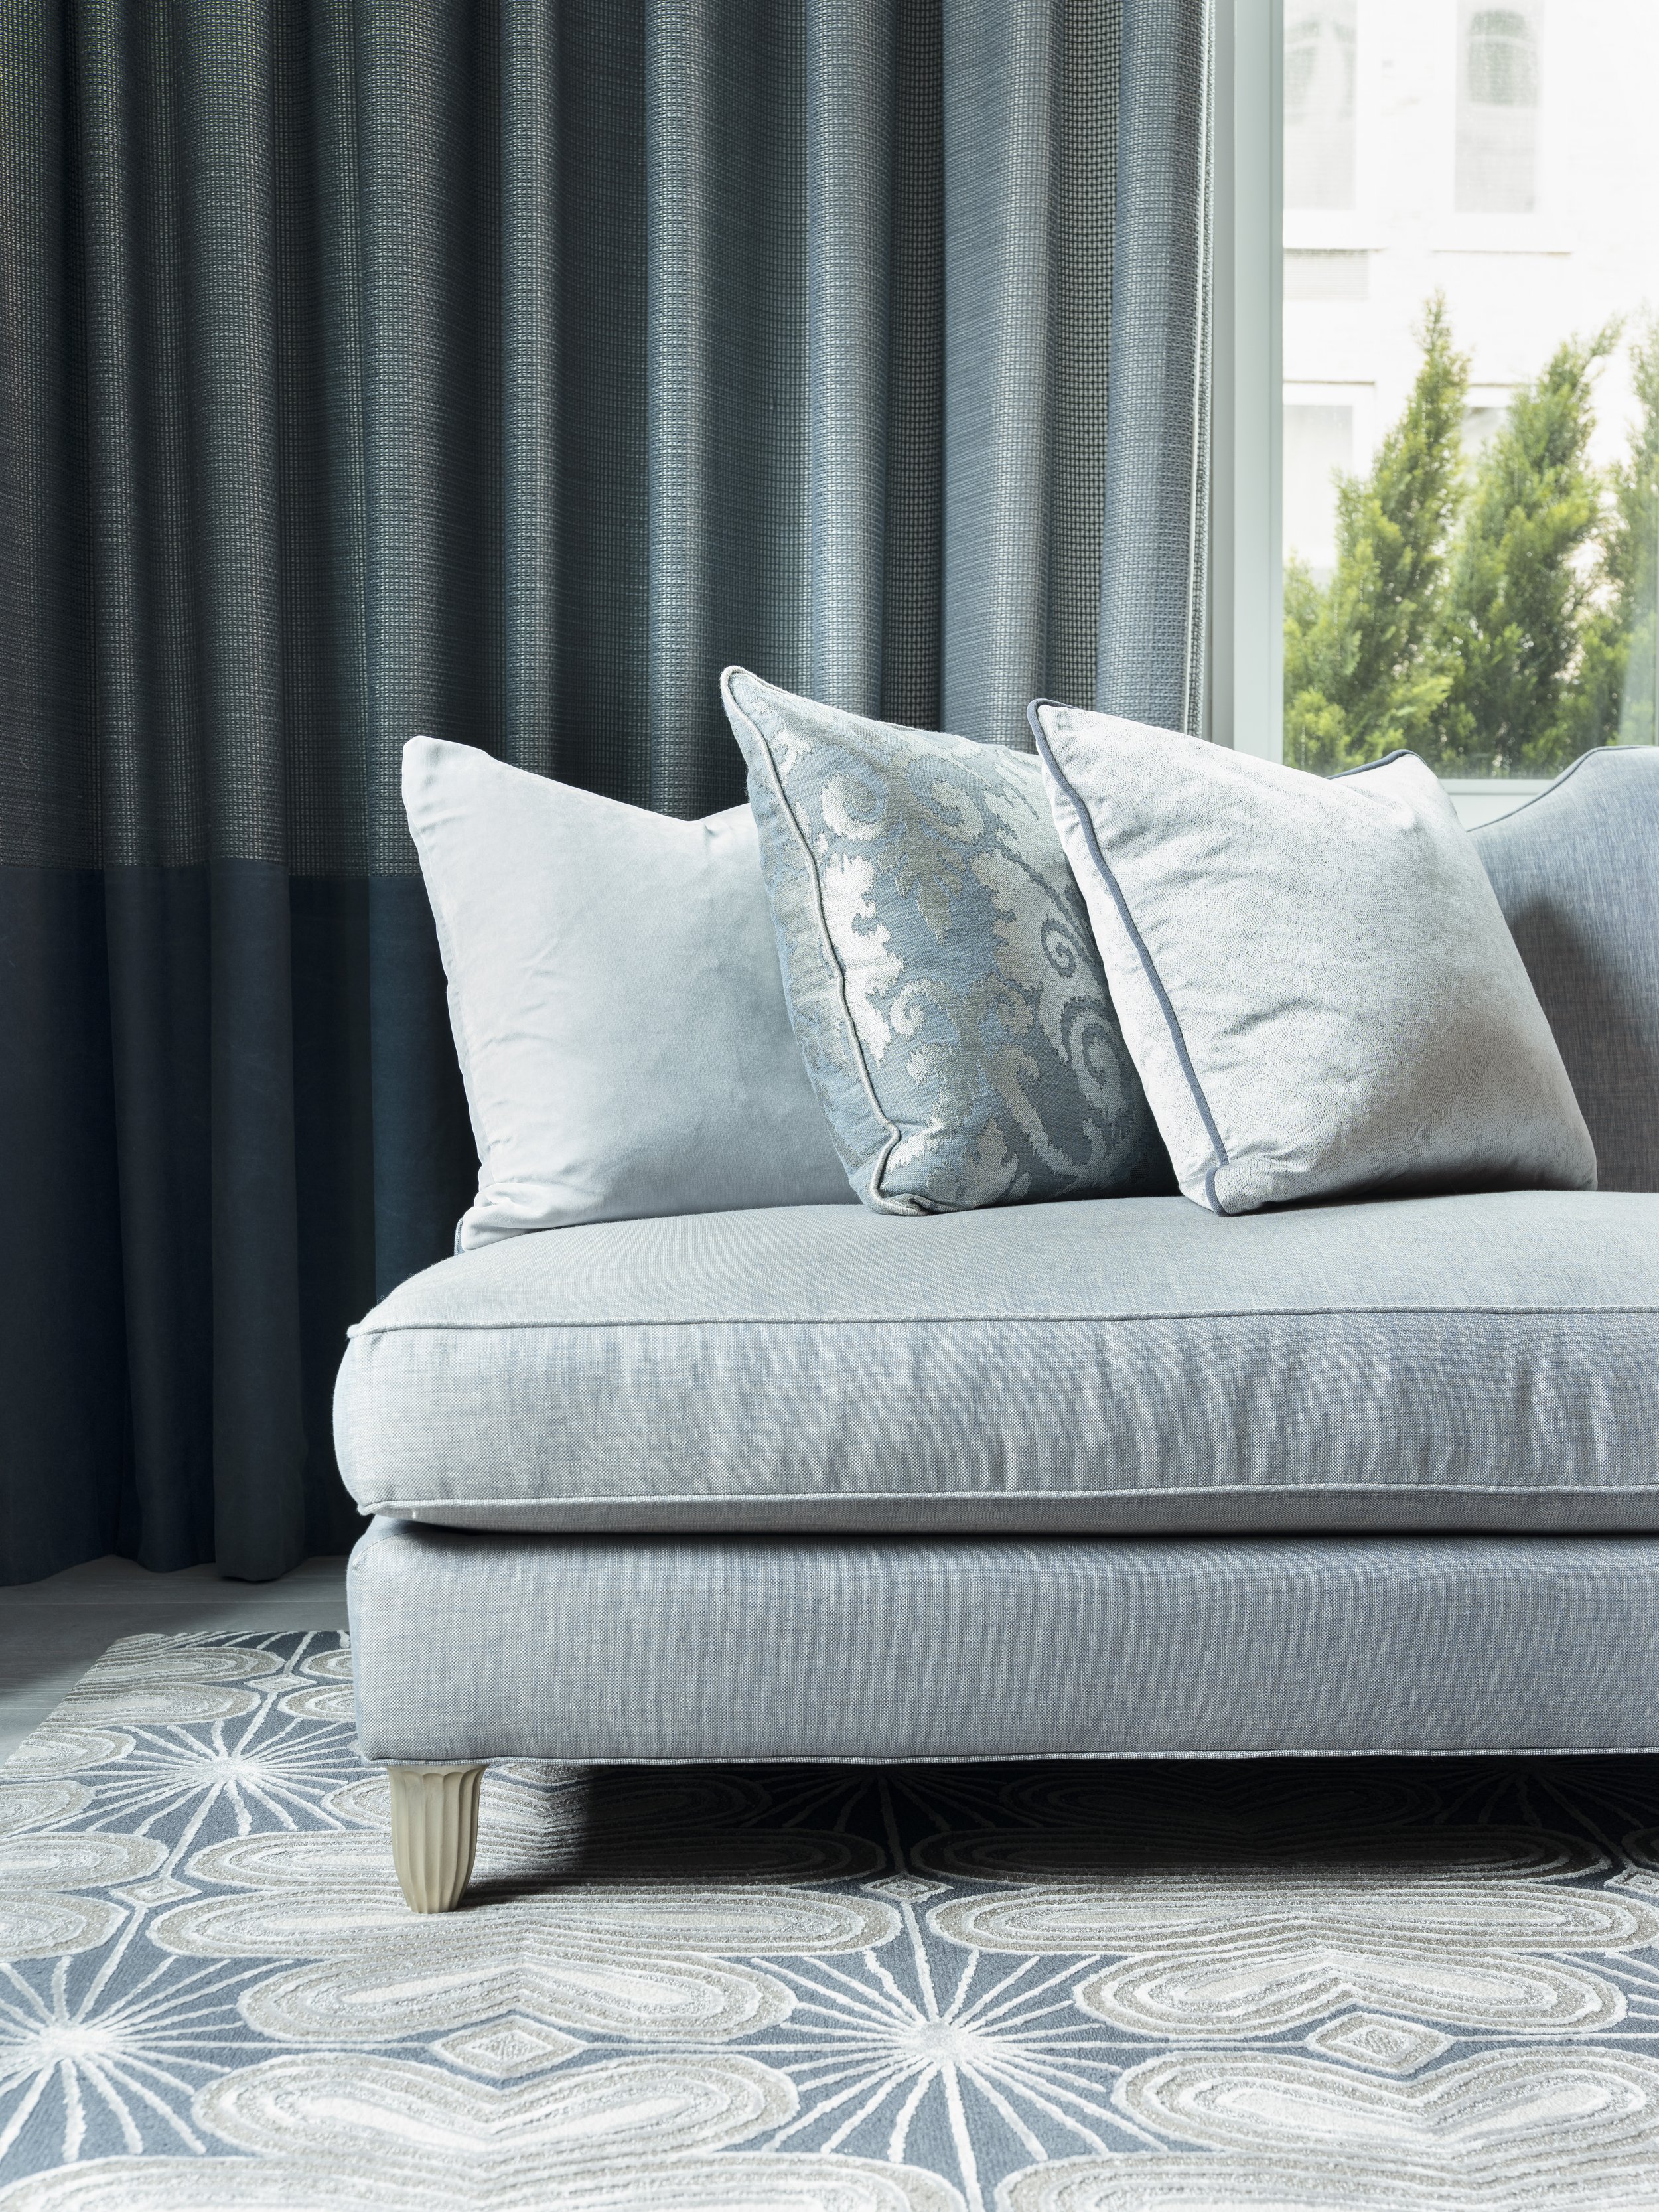 5-patterned-rug-decorative-pillows-textures-interior-designs-Manhattan.jpg